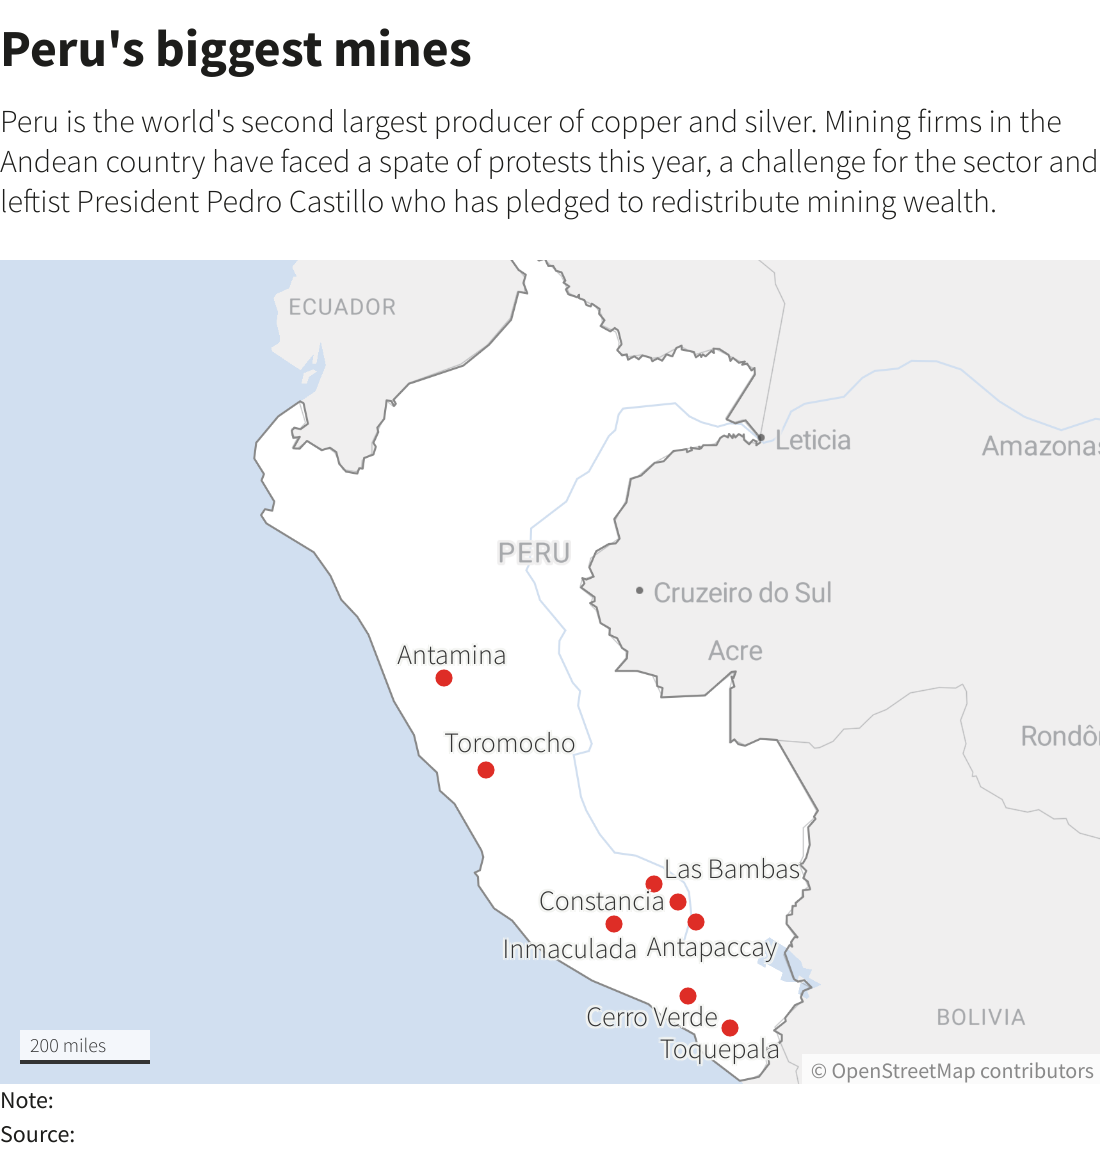 Peru's biggest mines